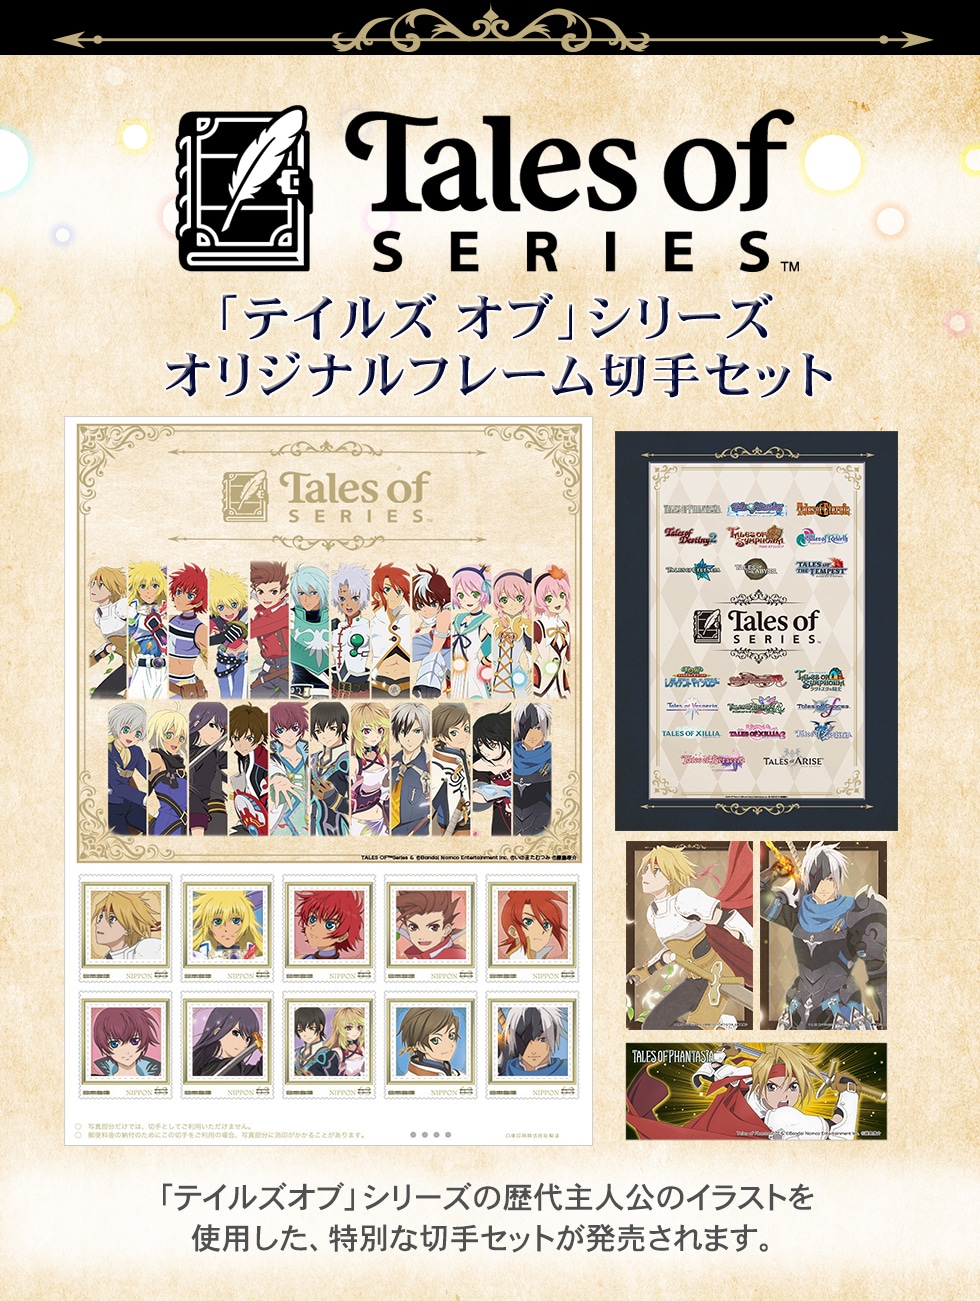 TalesofSERIESTM「テイルズオブ」シリーズオリジナルフレーム切手セット「テイルズオブ」シリーズの歴代主人公のイラストを使用した、特別な切手セットが発売されます。